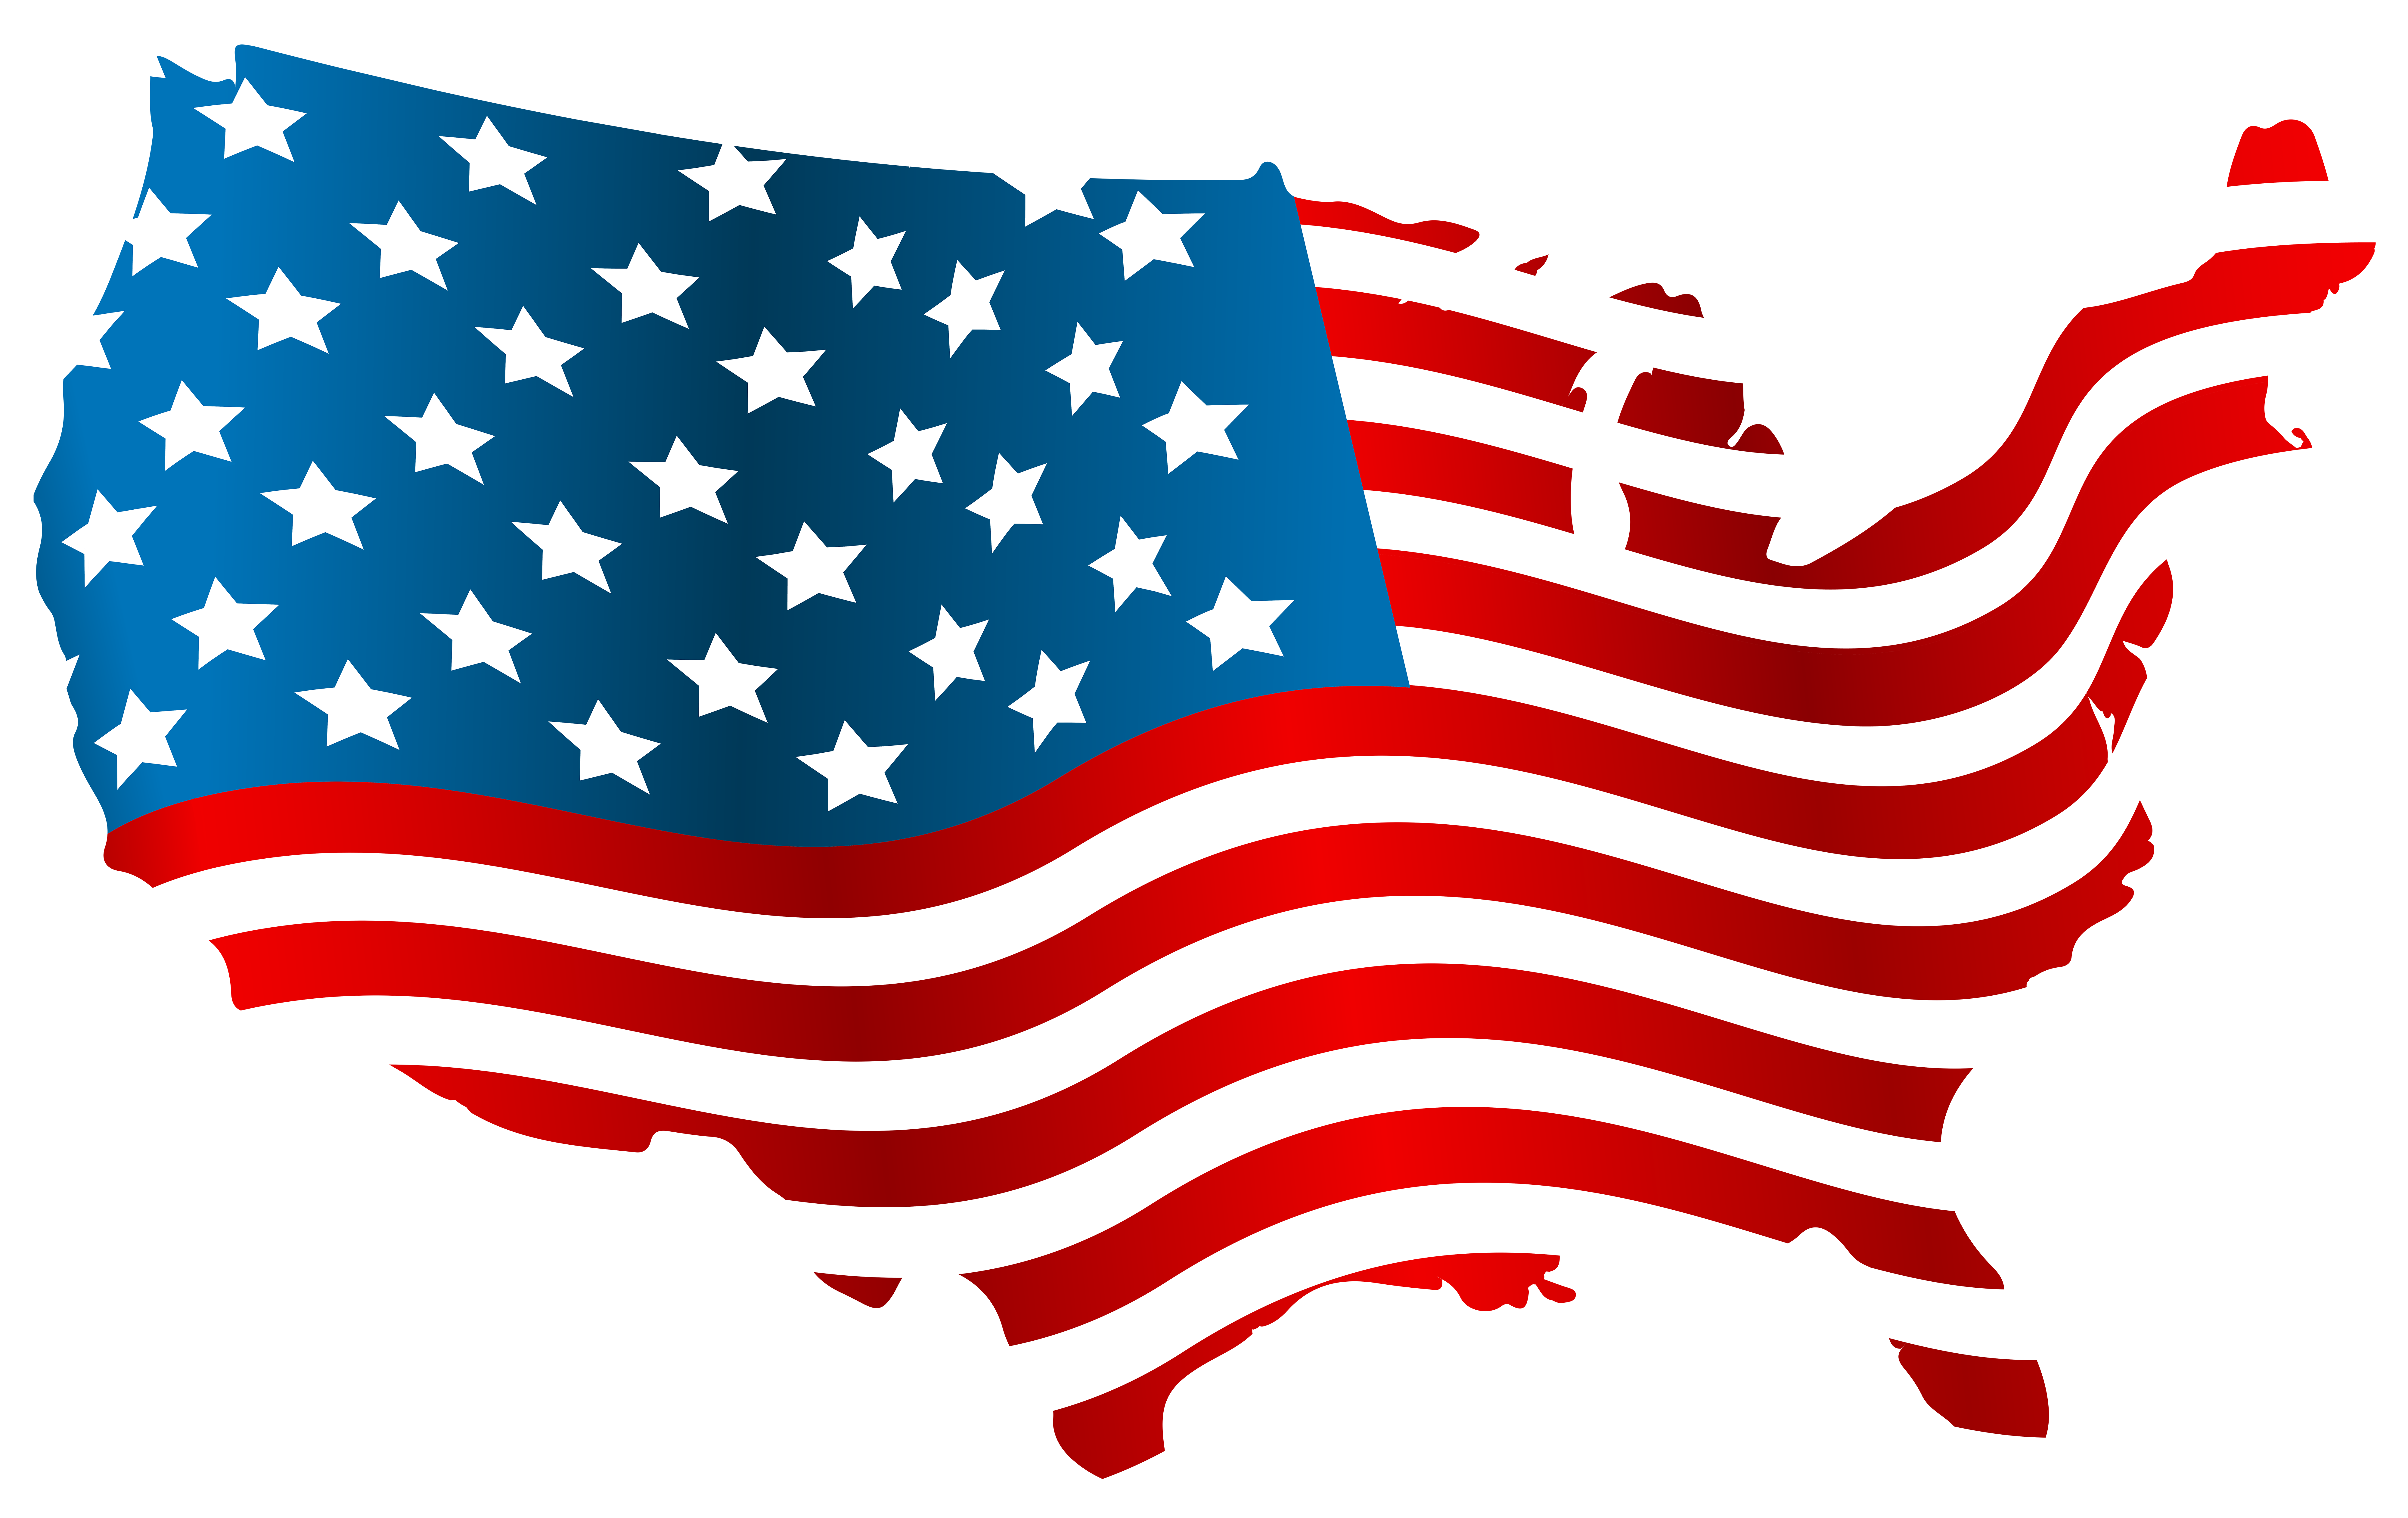 United america. Флаг ЮСА. Соединенные штаты Америки флаг. Флаг США 1787. Флаг США на прозрачном фоне.